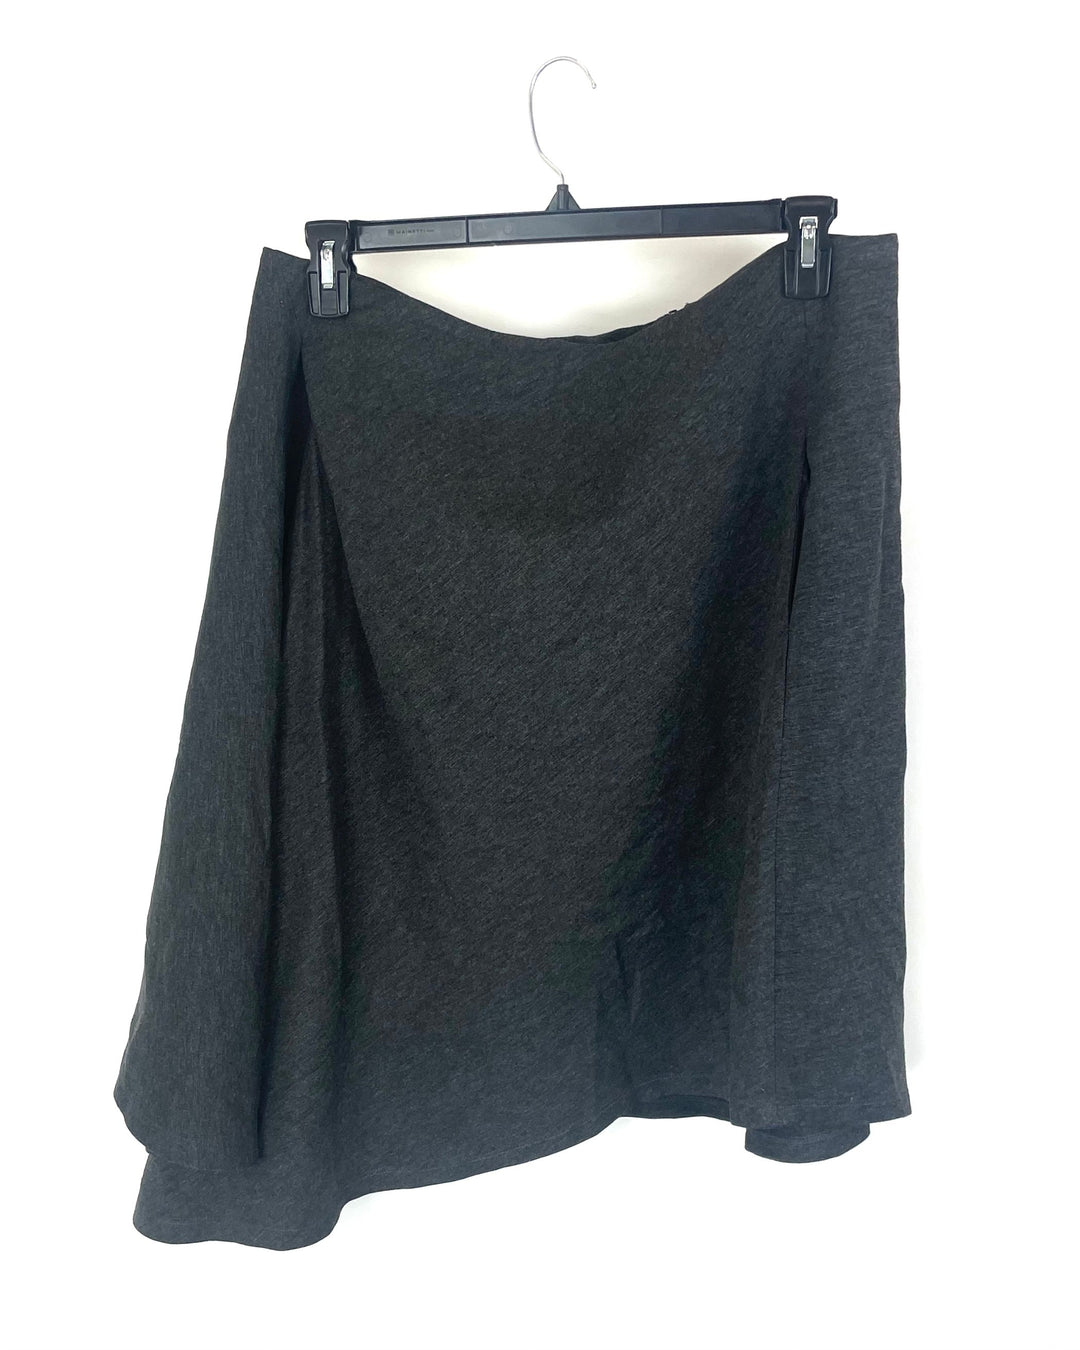 Gray Asymmetrical Skirt - Size 16, 18, 20